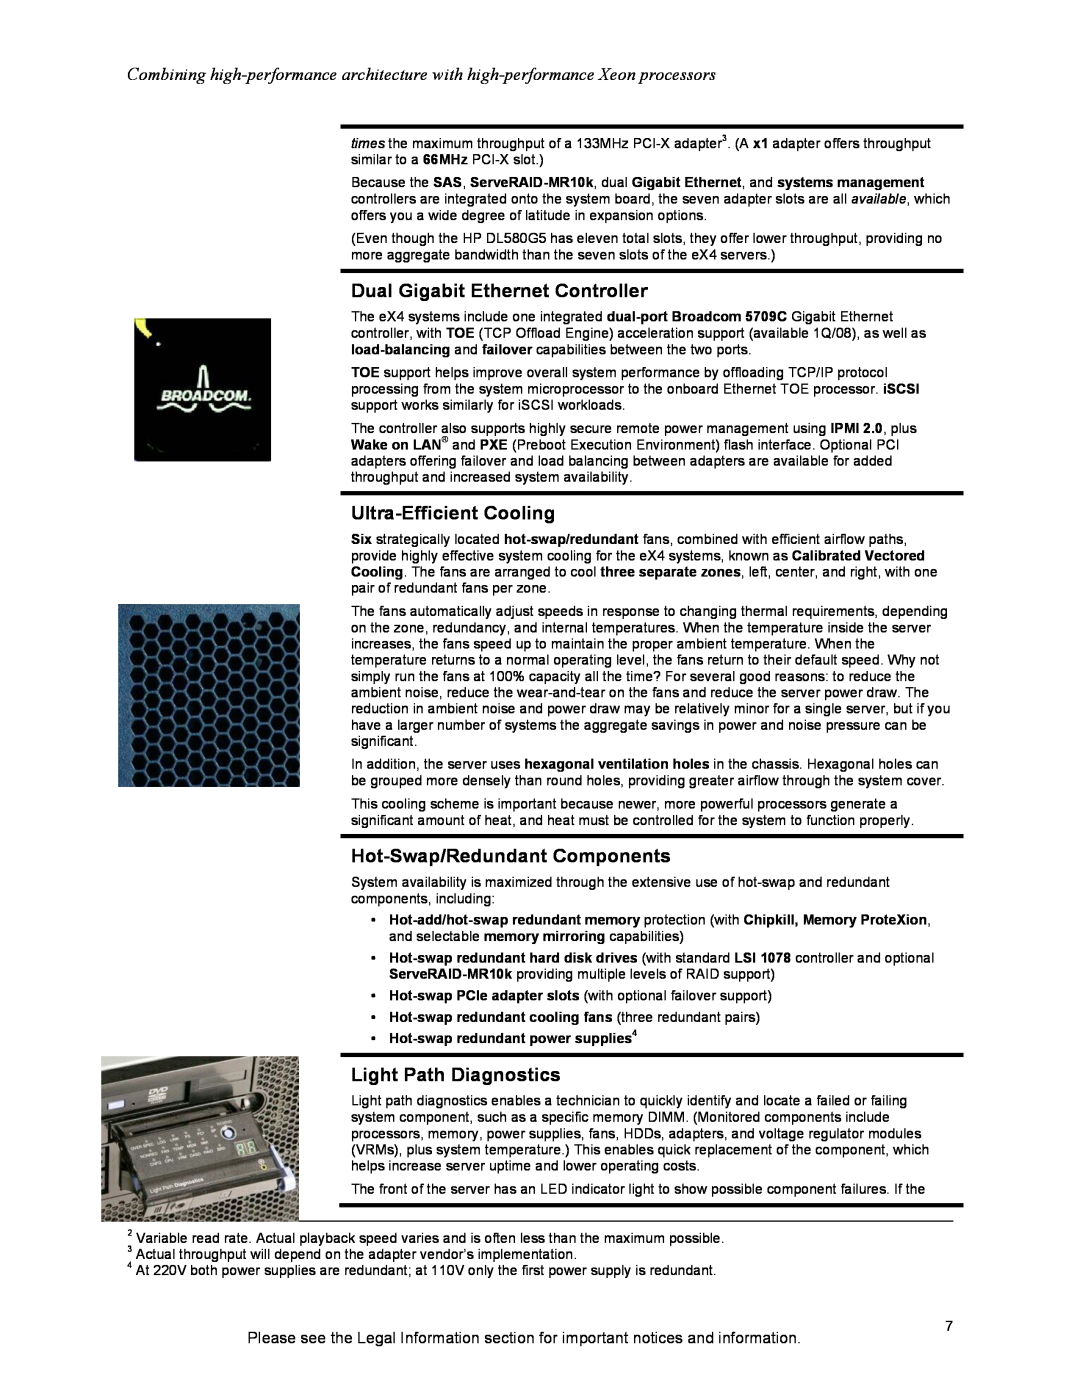 IBM X3950 M2, X3850 M2 manual Dual Gigabit Ethernet Controller, Ultra-Efficient Cooling, Hot-Swap/Redundant Components 